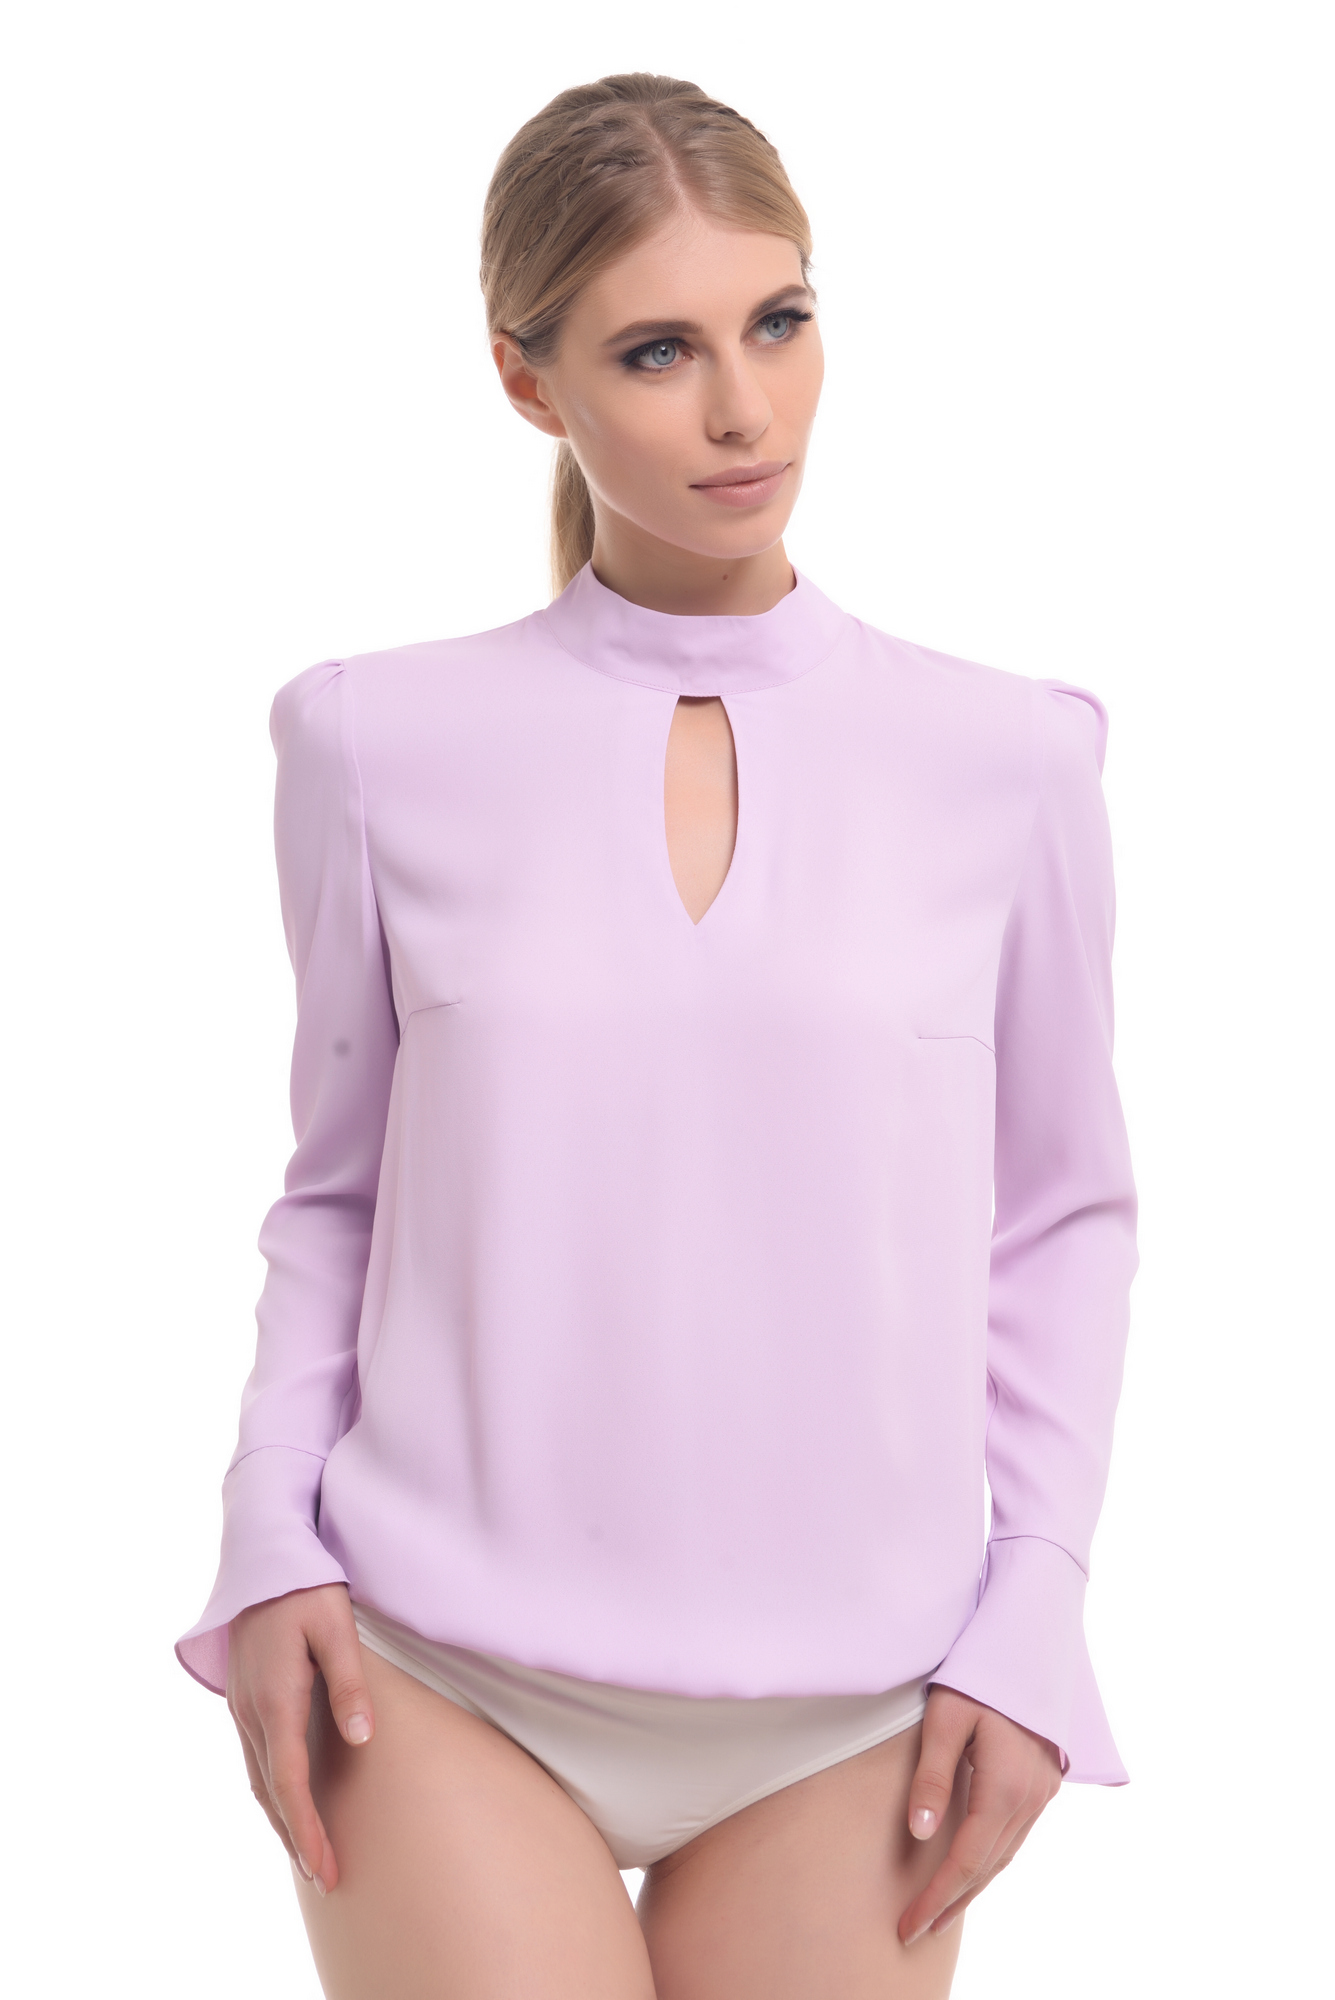 Buy Women Purple blouse body Business Office Loose Long sleeve by Arefeva